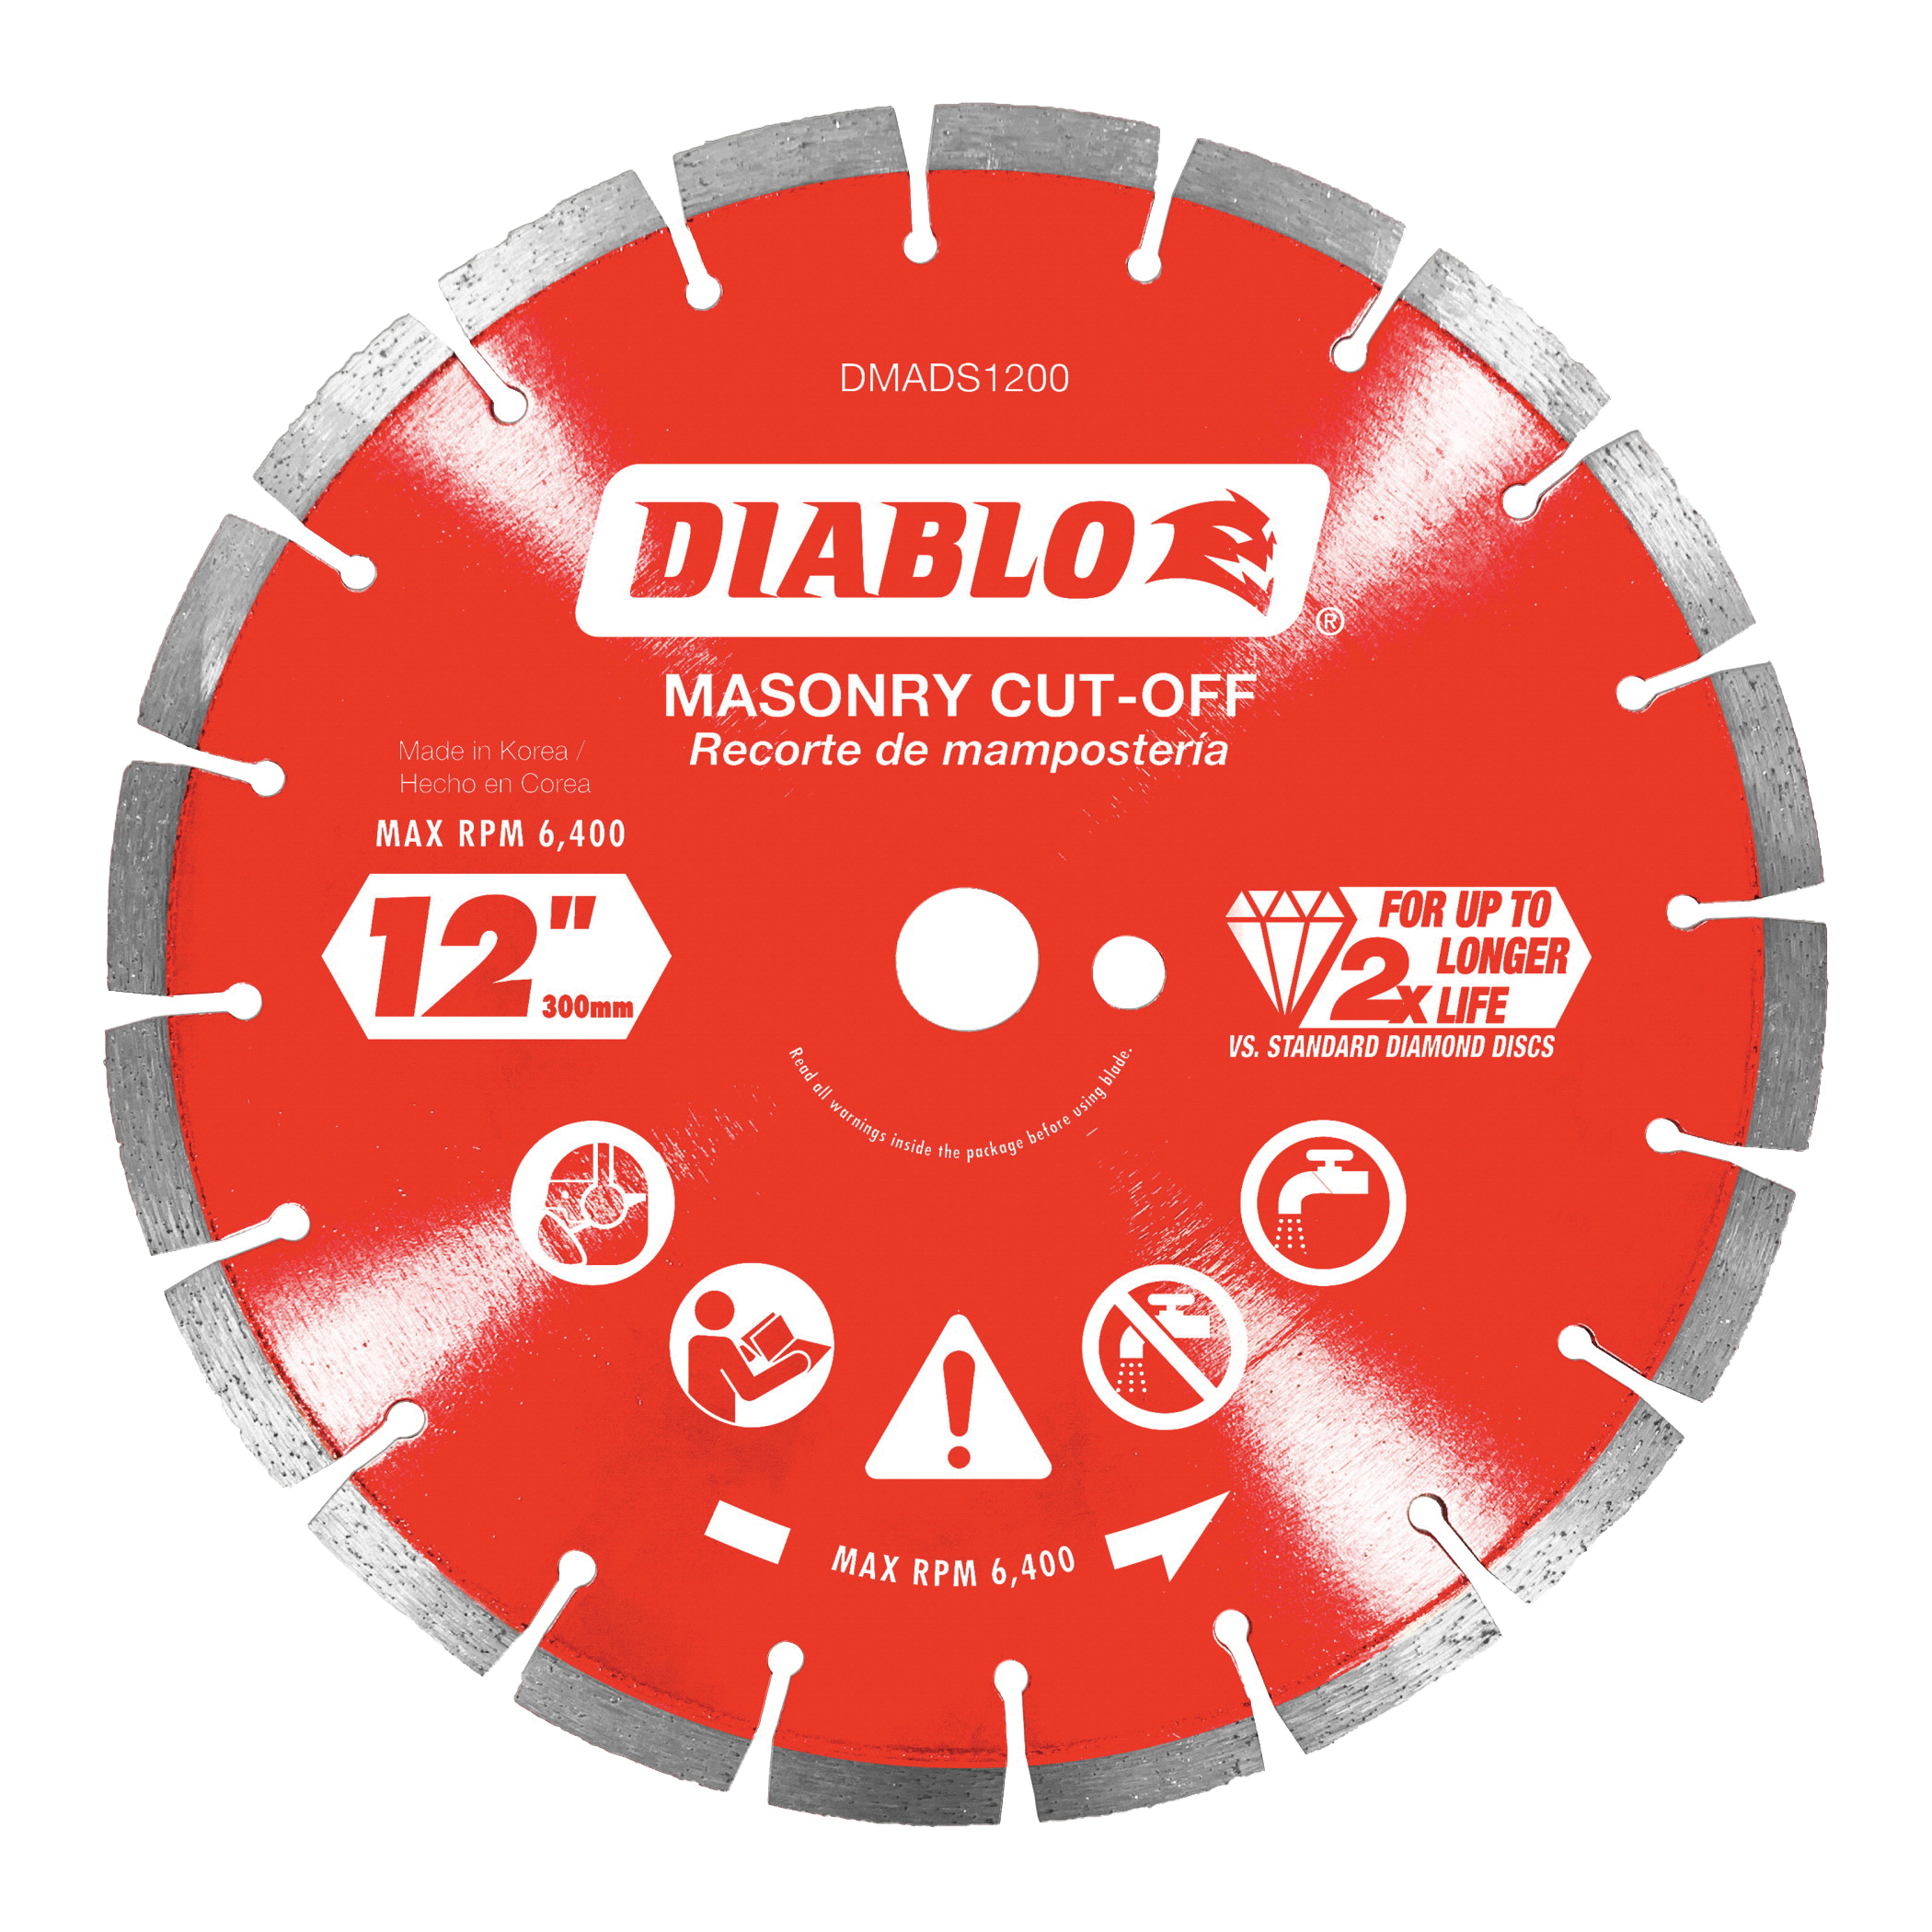 Diablo DMADS1200